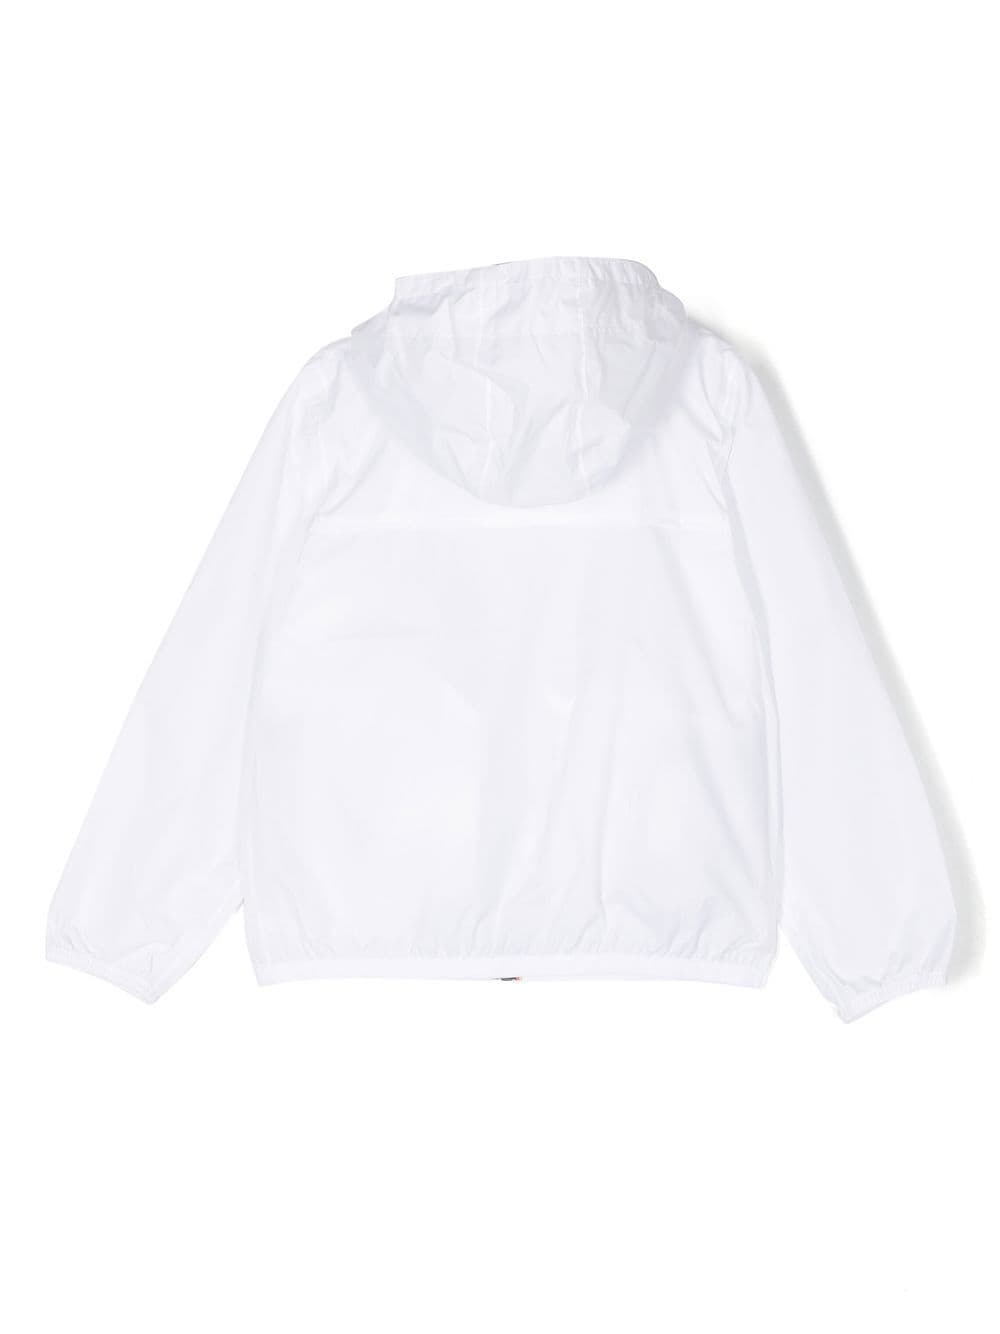 White jacket for children with logo